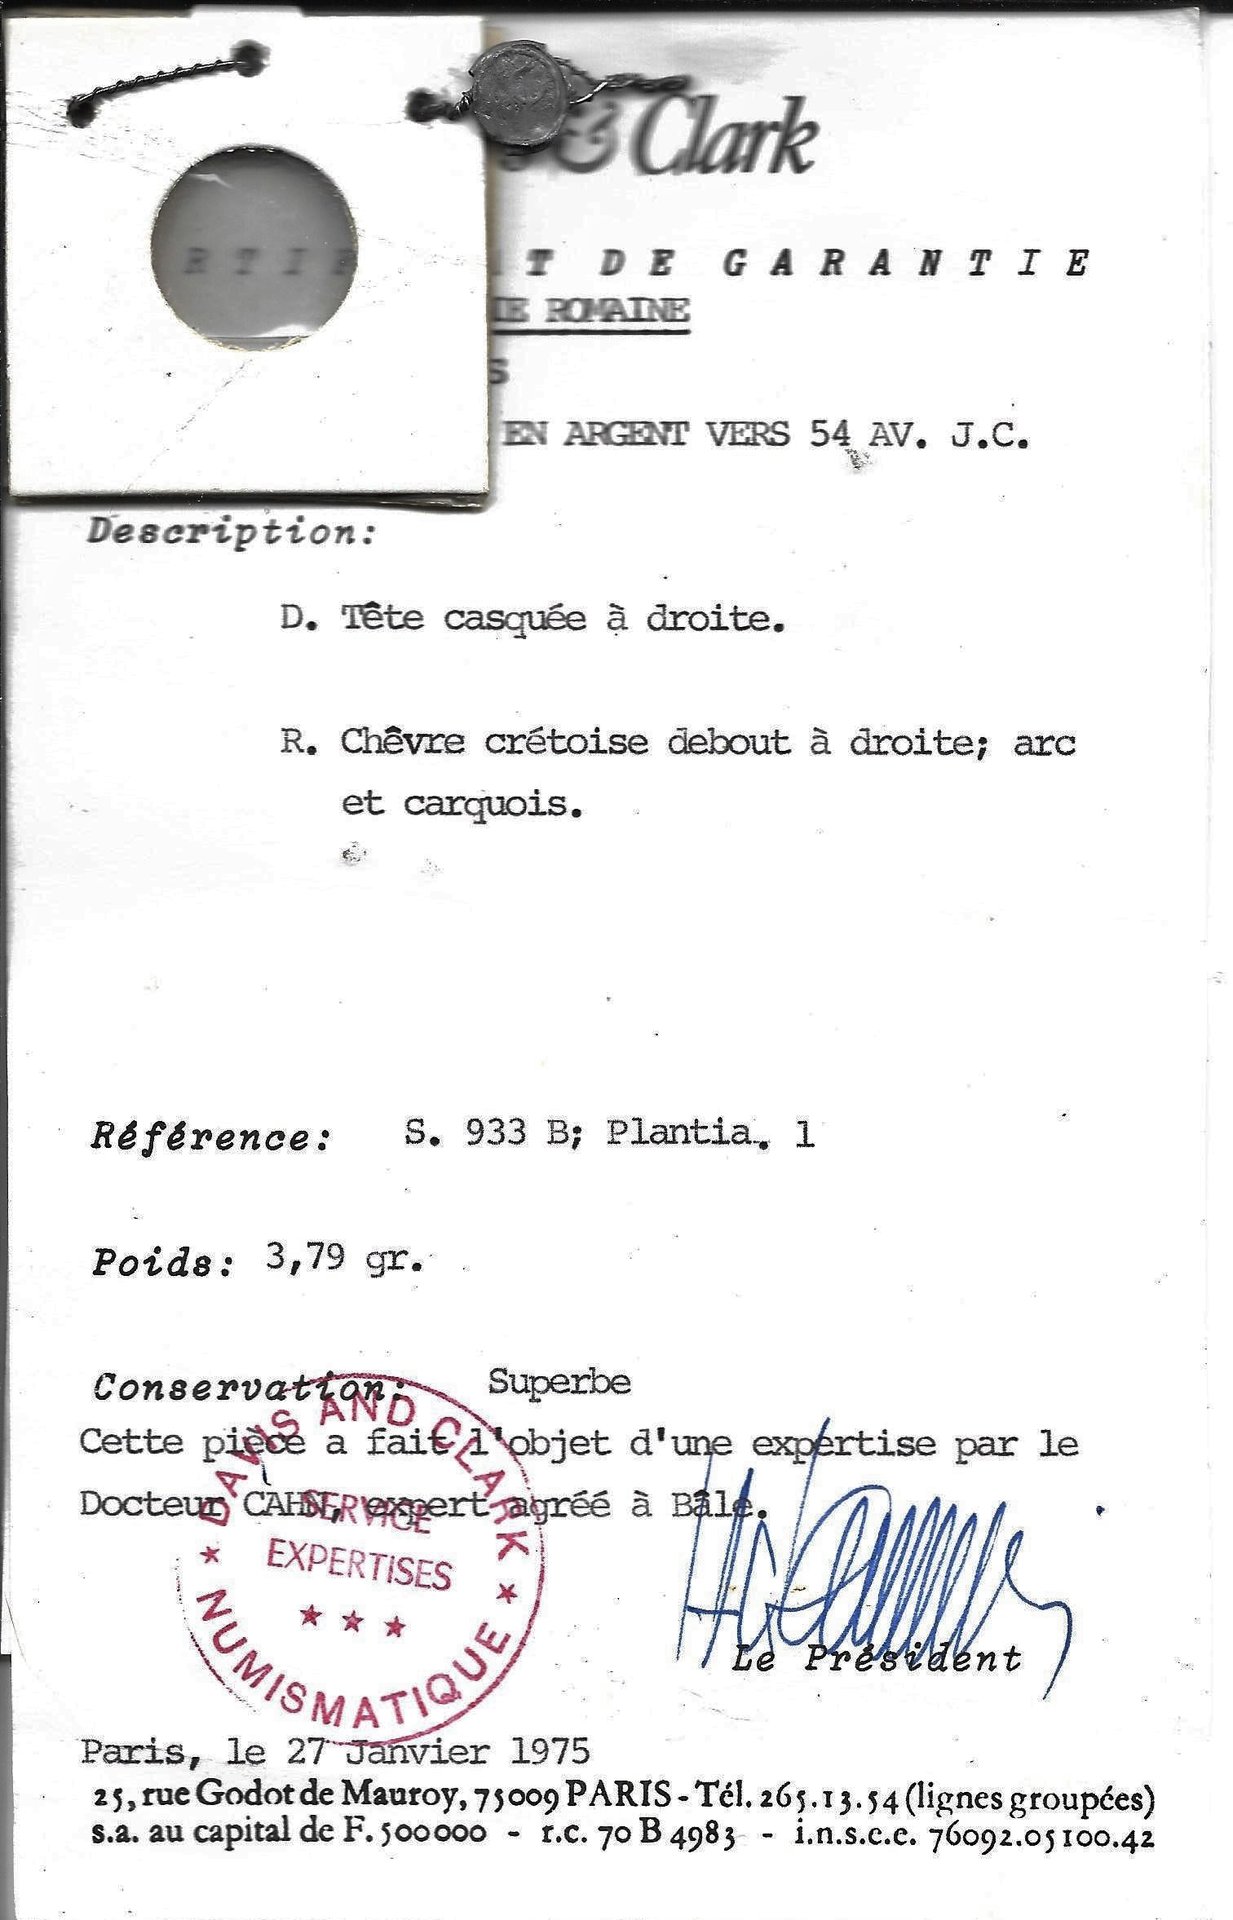 Head of Macedonia-Cretan goat den. - Jan 1975 Davis & Clark, Paris certificat do garantie.jpg